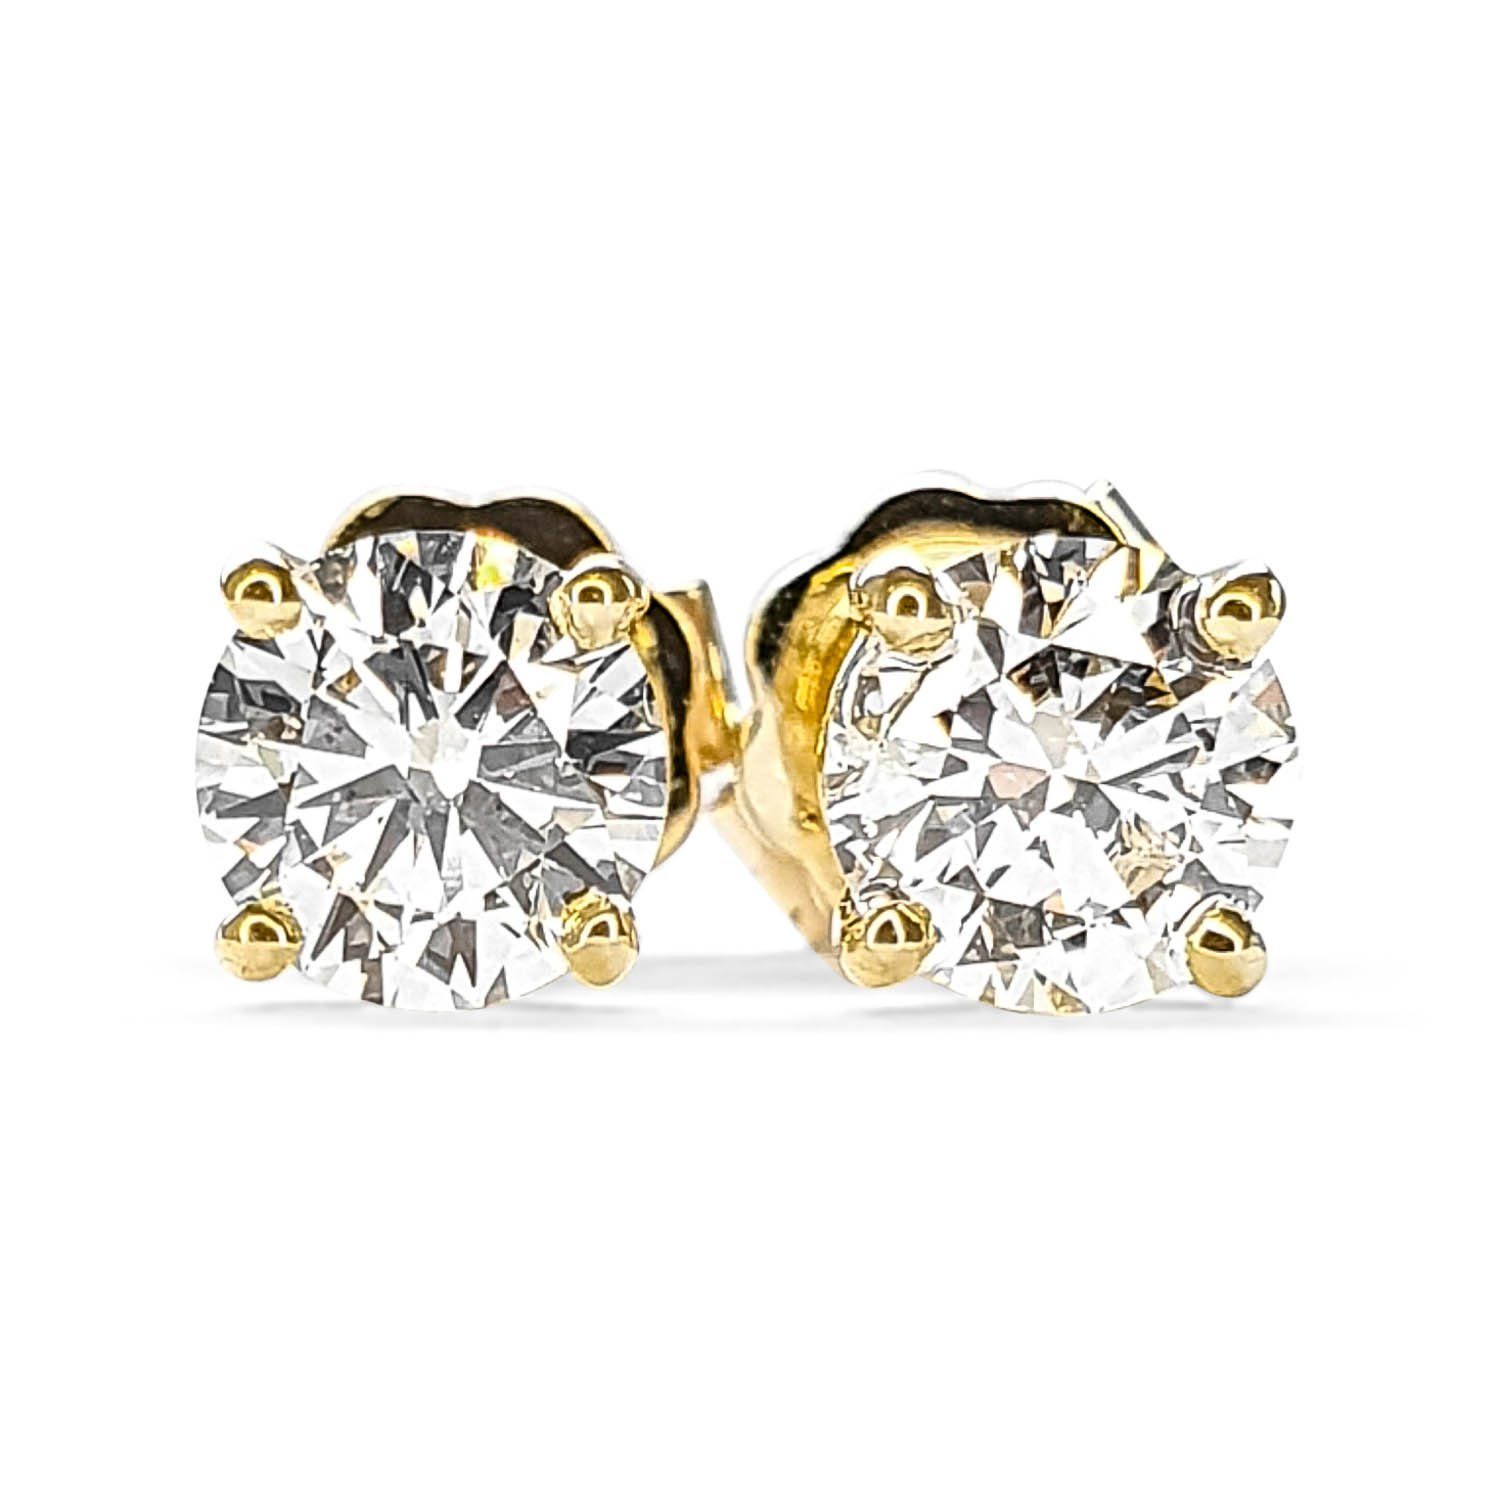 Webgoldschmied Paar Ohrstecker Diamant Ohrstecker 750 Gold mit 2 Diamanten Brillanten 1,05 ct F/IF, handgearbeitet